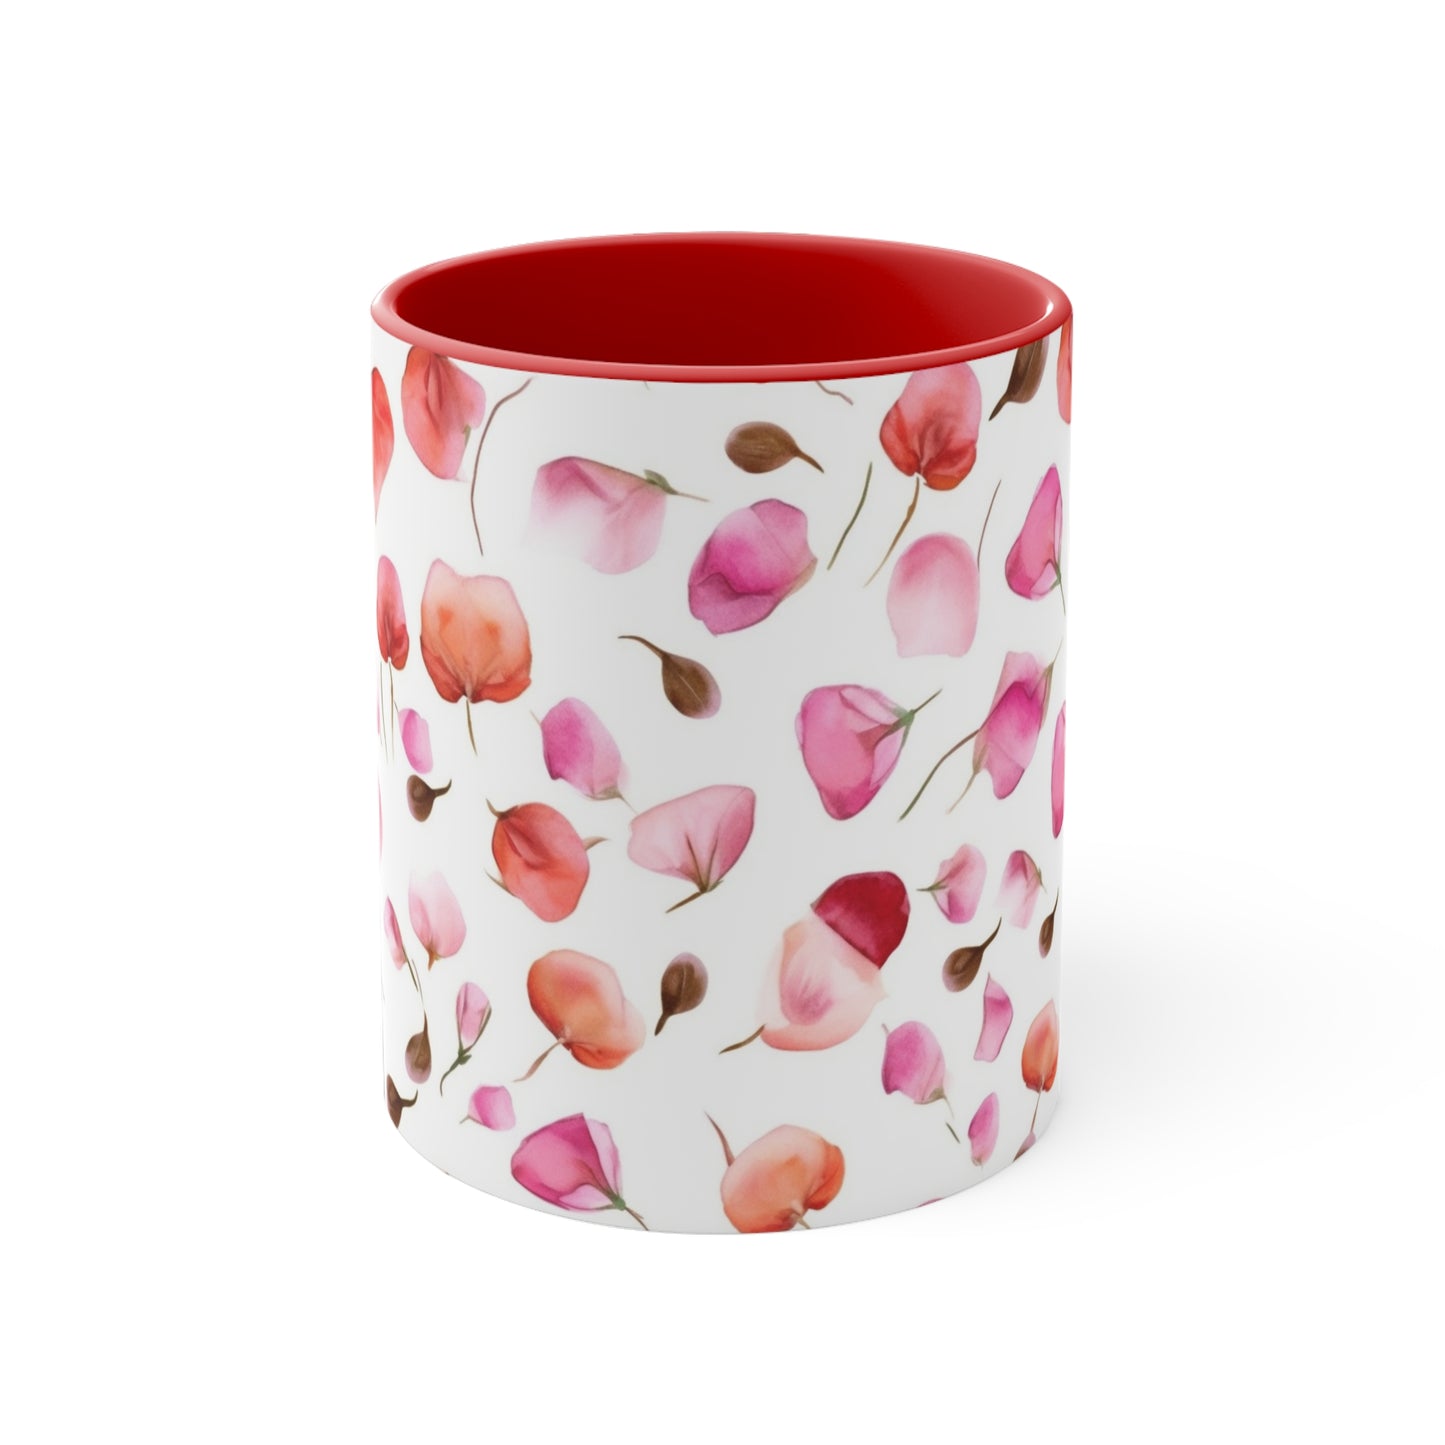 Poppy Flower Design Coffee Mug in Black or Red